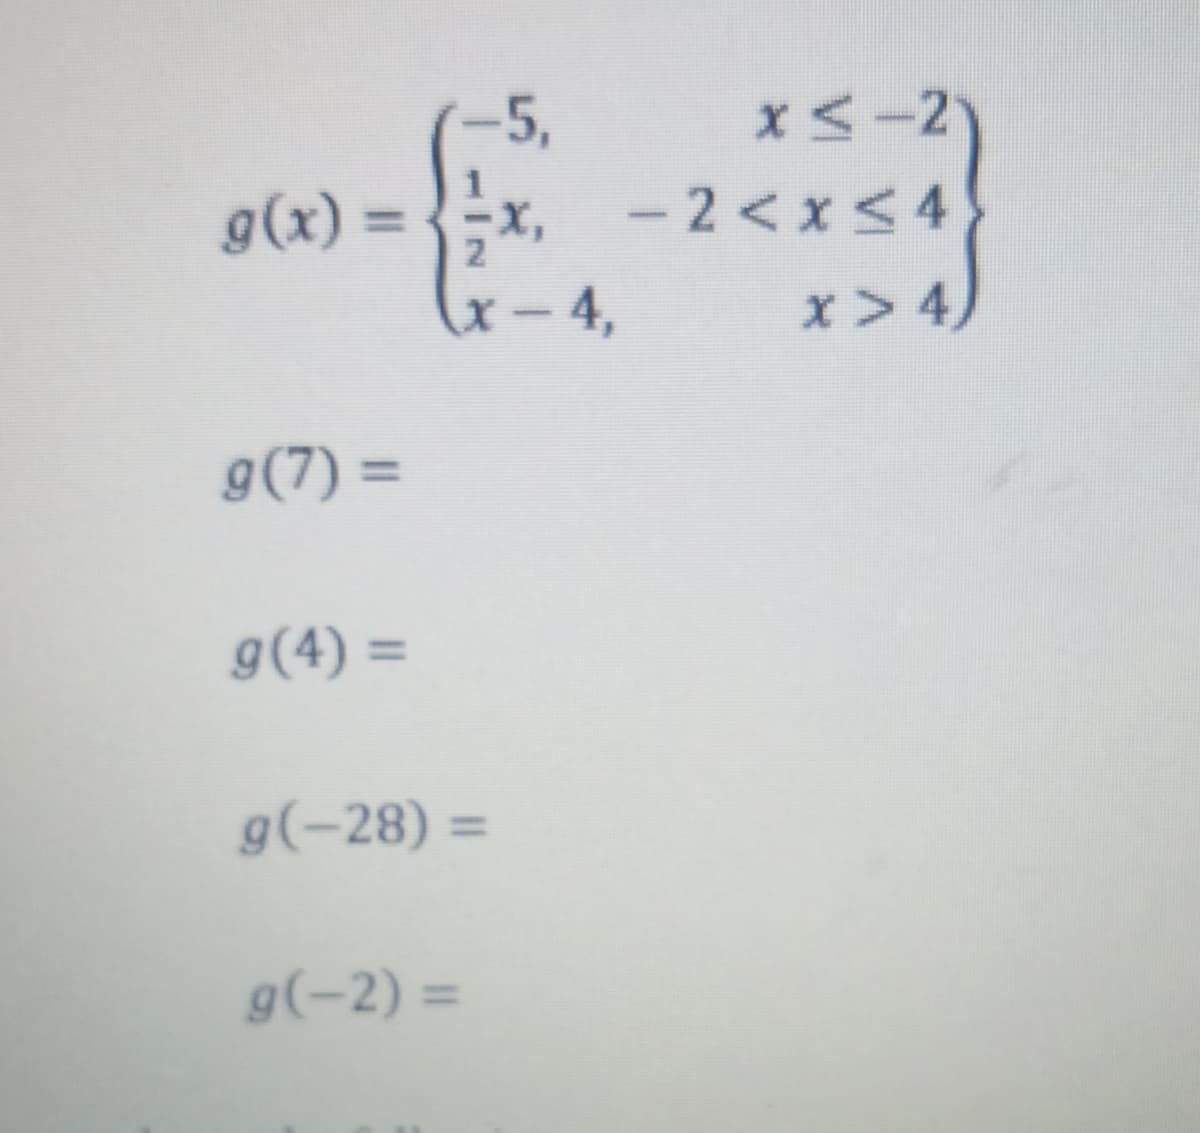 x<-2
- 2 < x<4
-5,
= (x)6
x-4,
x>4)
g(7) =
g(4) =
g(-28) =
g(-2) =
%3D
